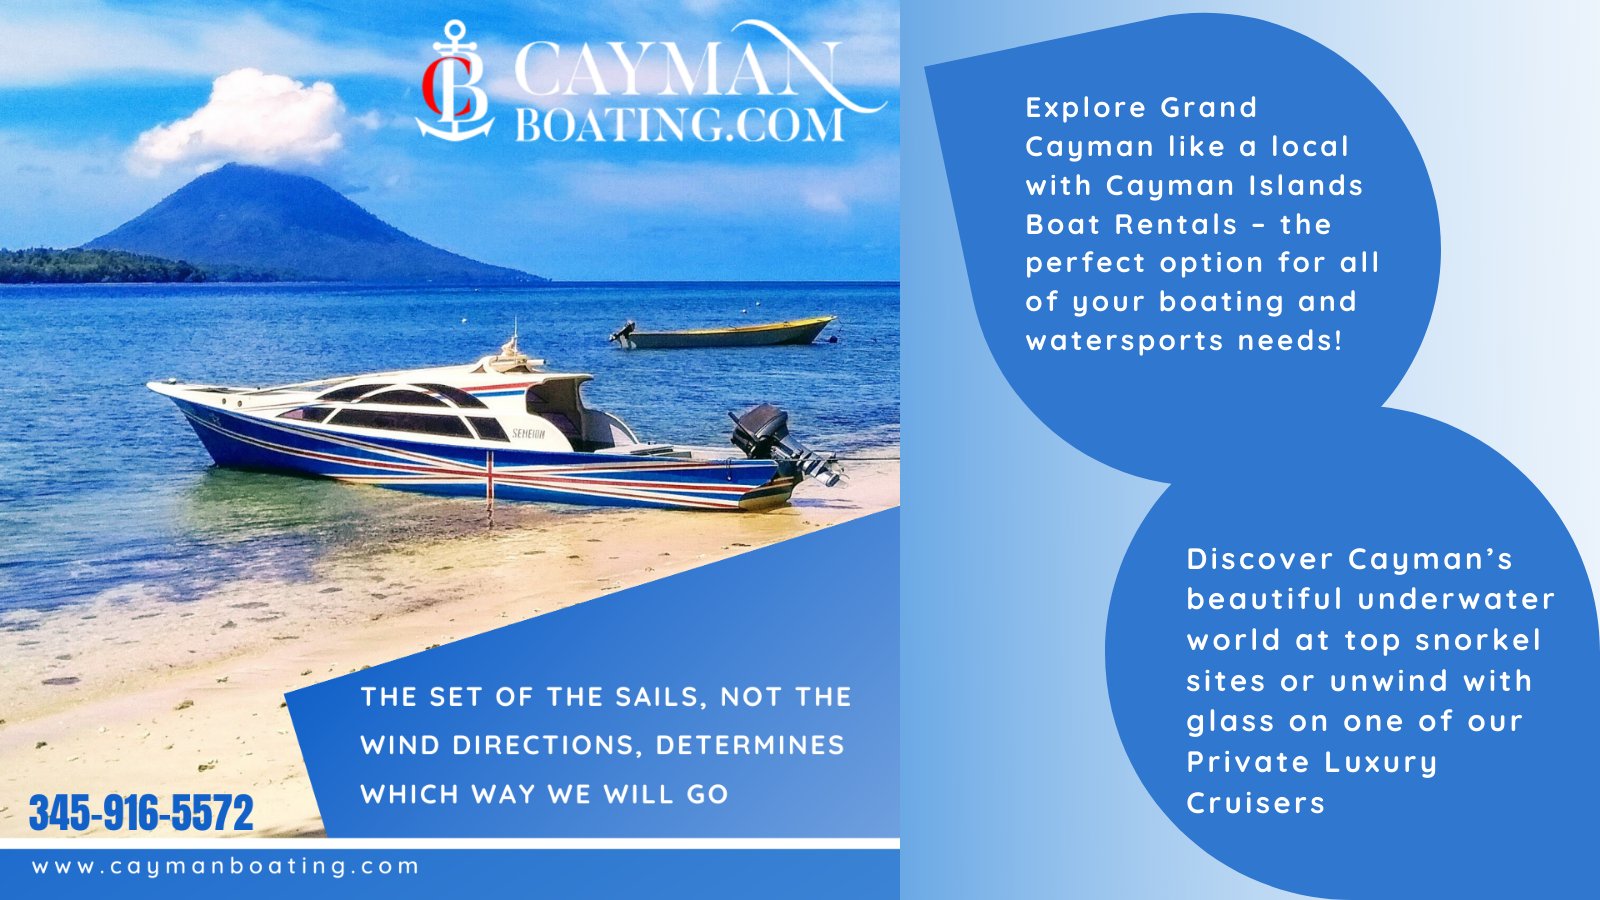 Cayman Boating (@BoatingCayman) / Twitter